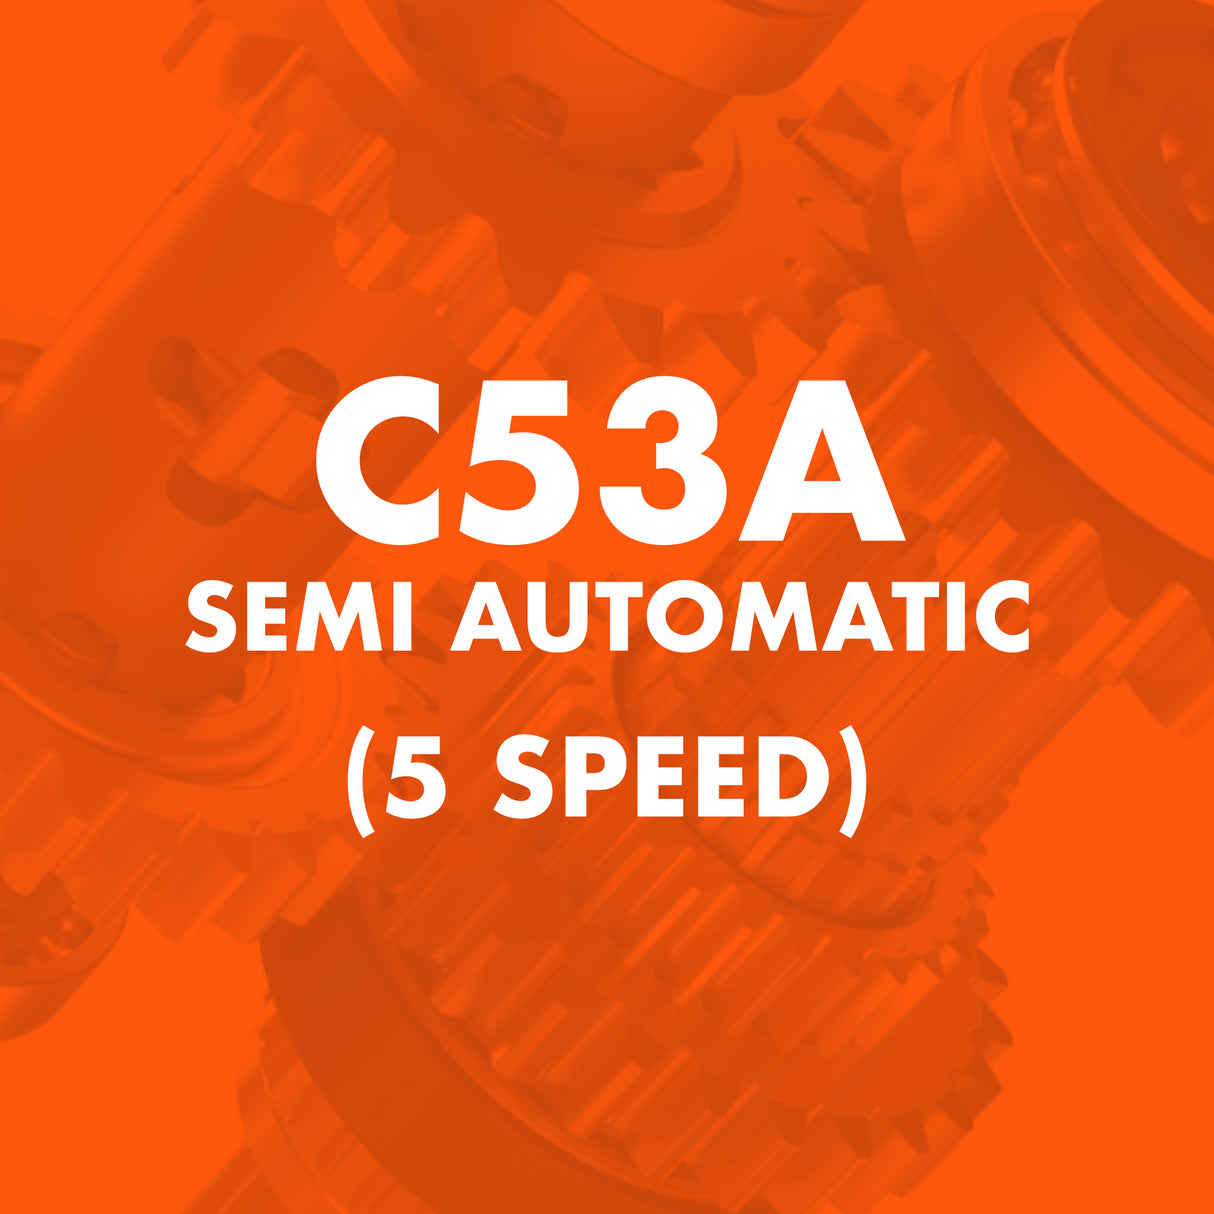 C53A Semi Automatic (5 Speed) Catalogue